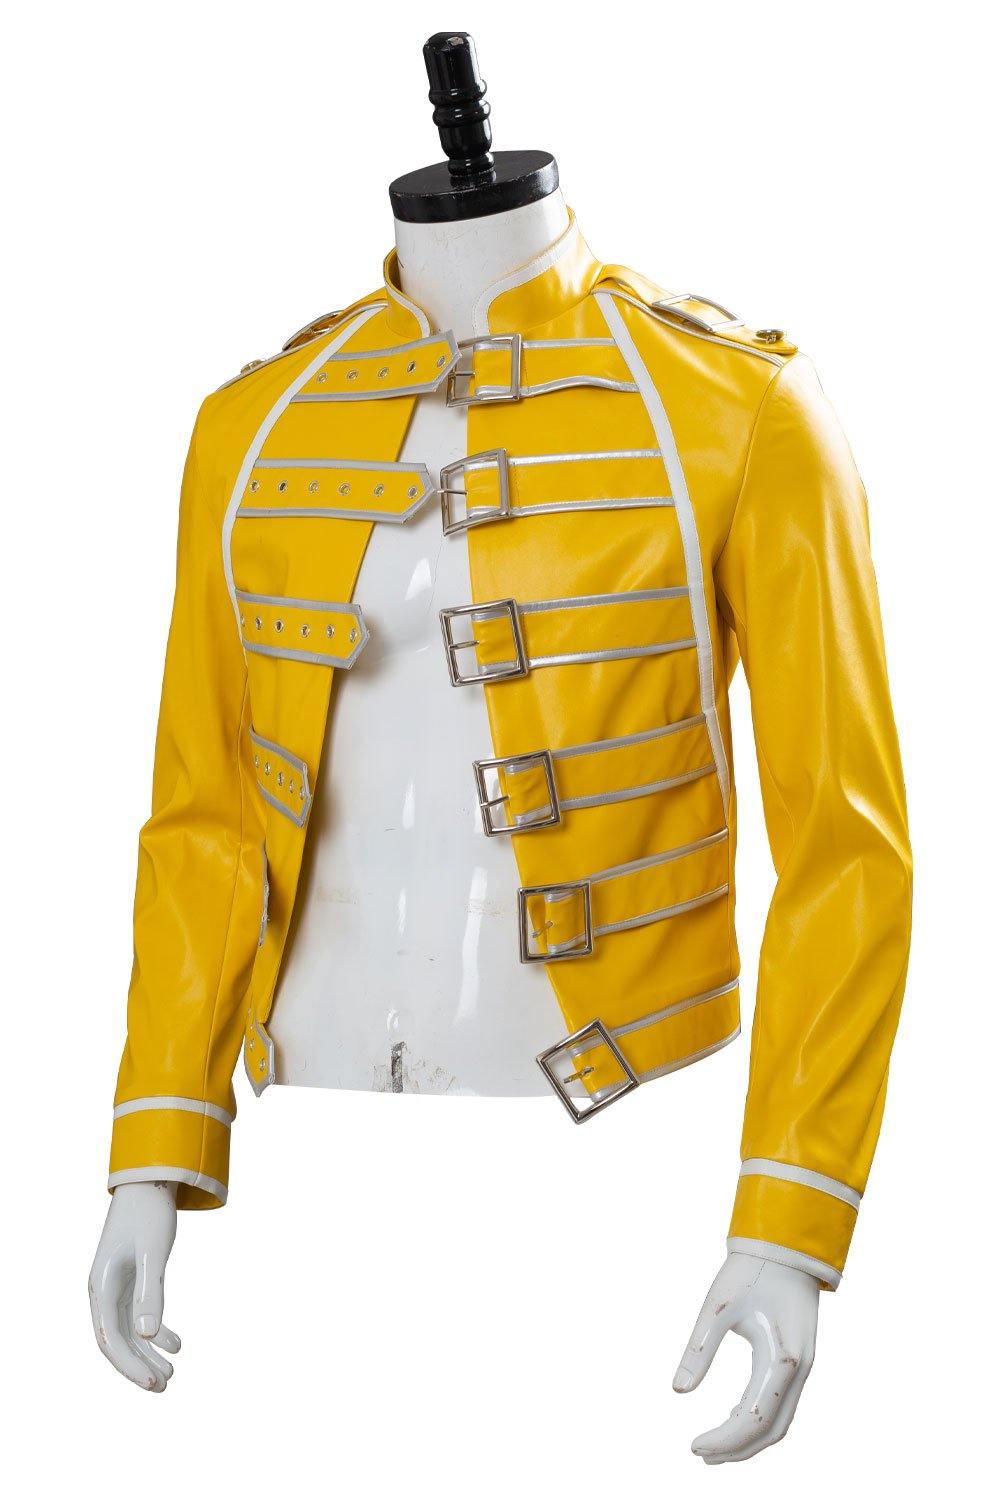 Band Queen Freddie Mercury Jacke Cosplay Kostüm NEU - cosplaycartde